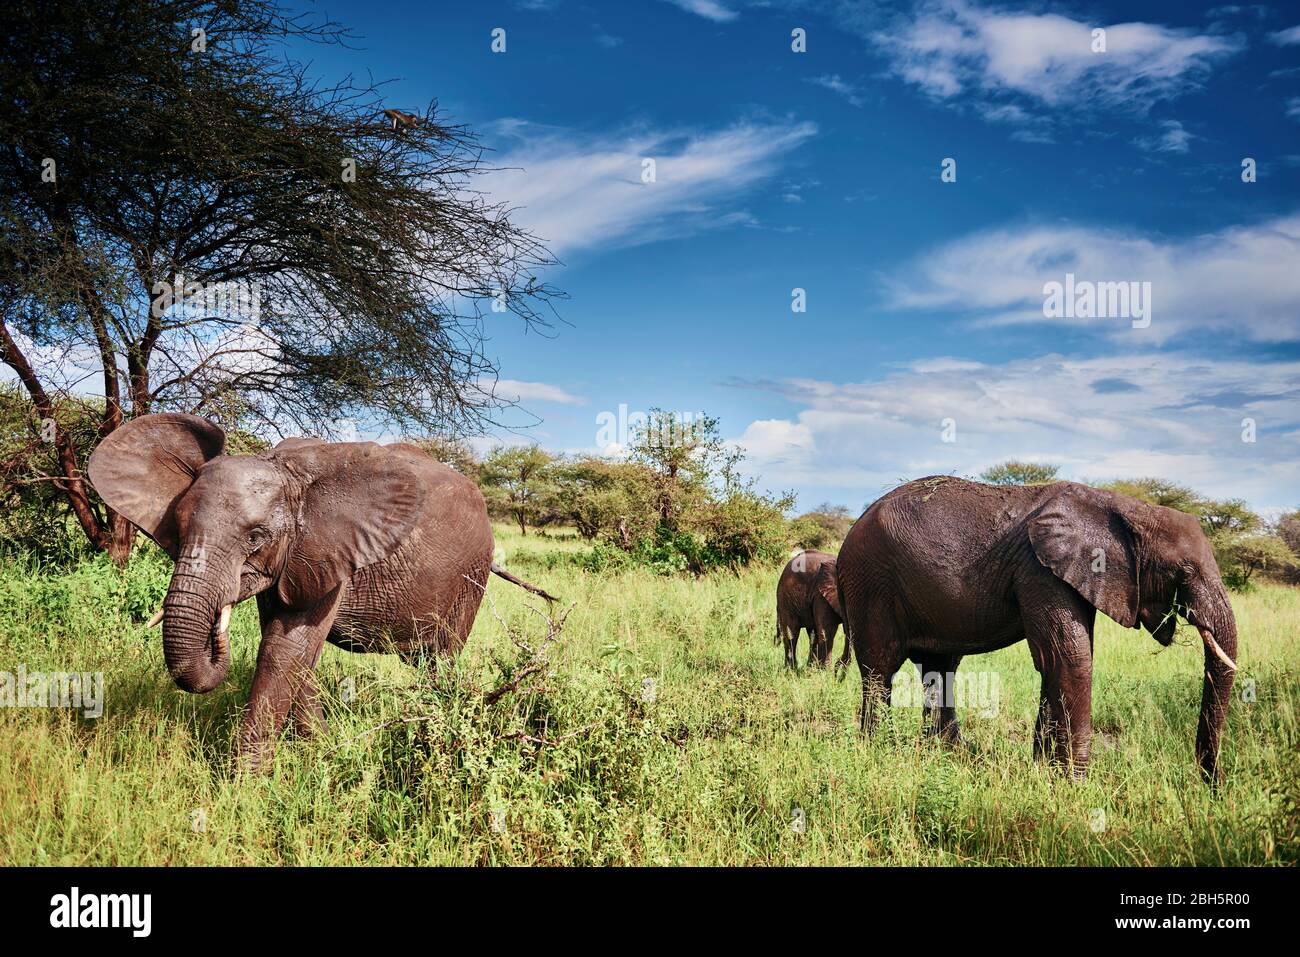 Shot of three elephants in Africa Stock Photo